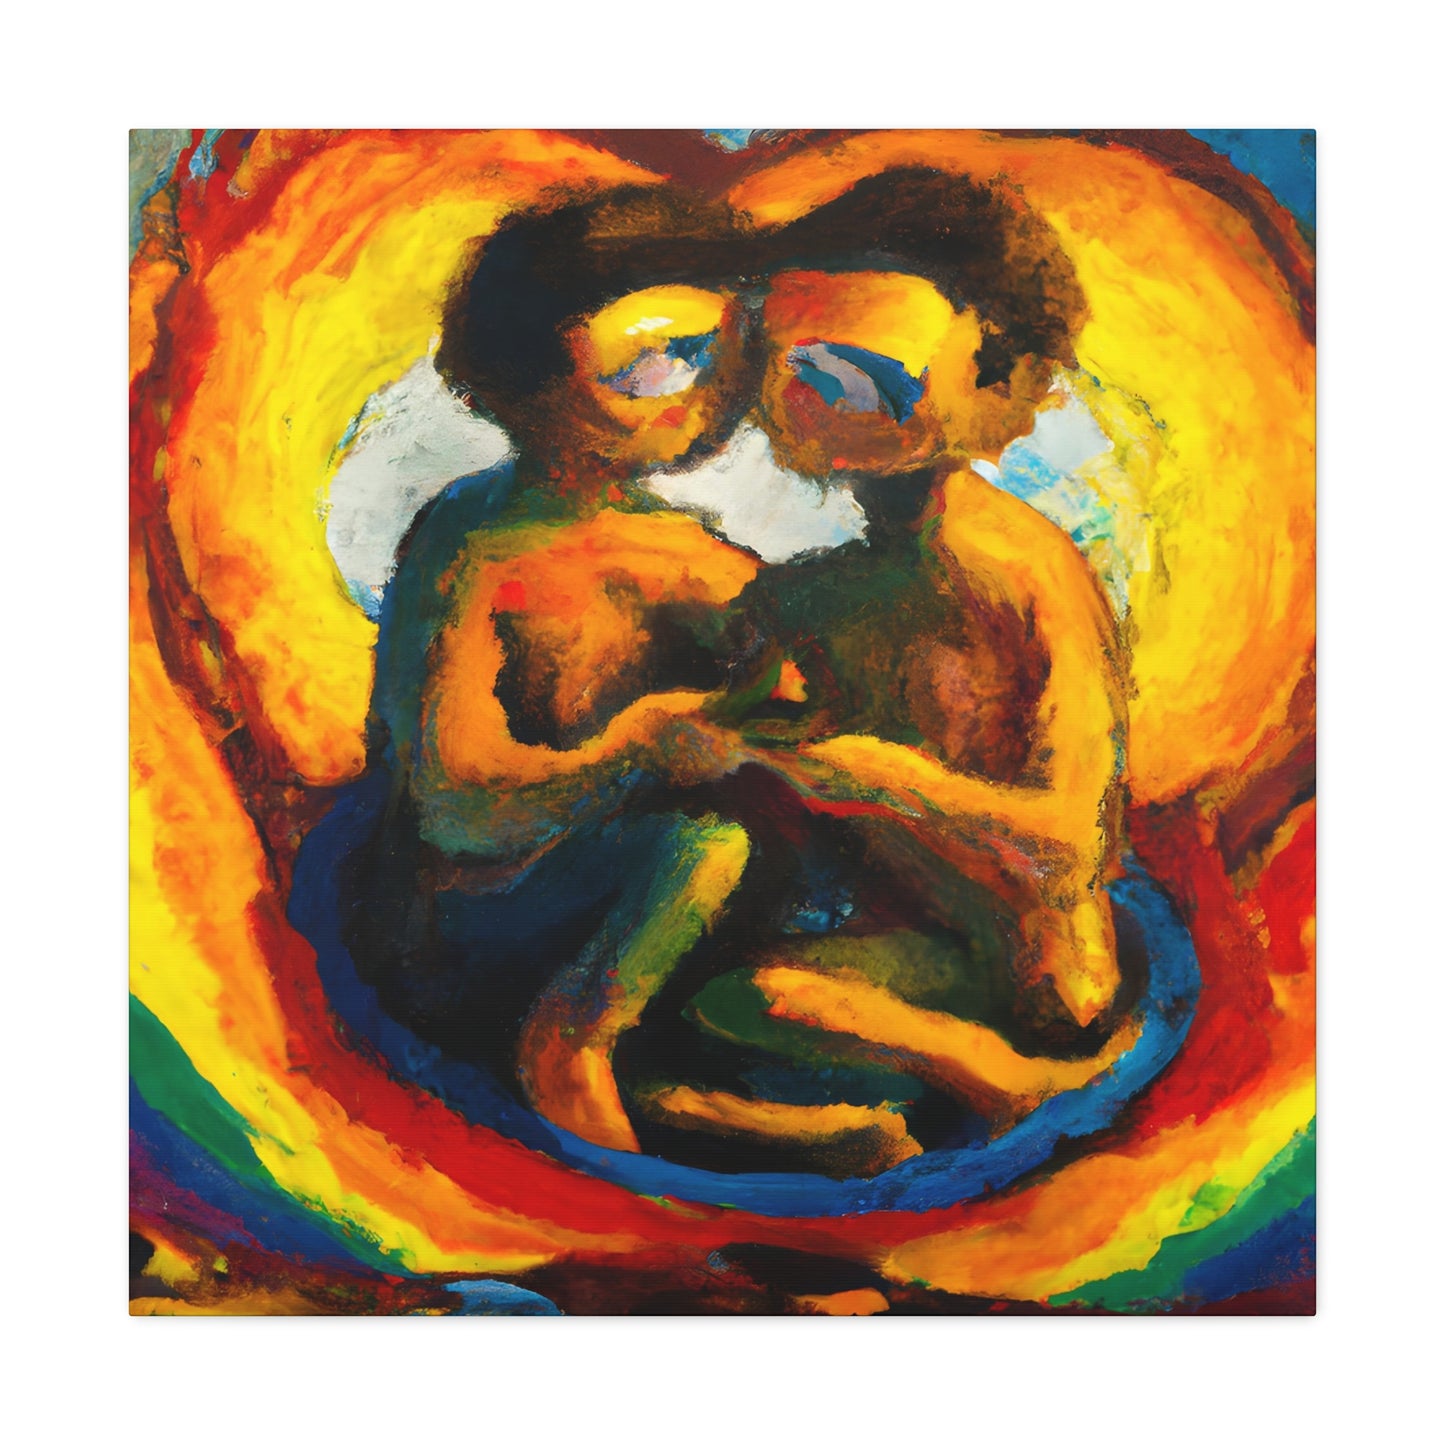 Brandon - Gay Love Canvas Art